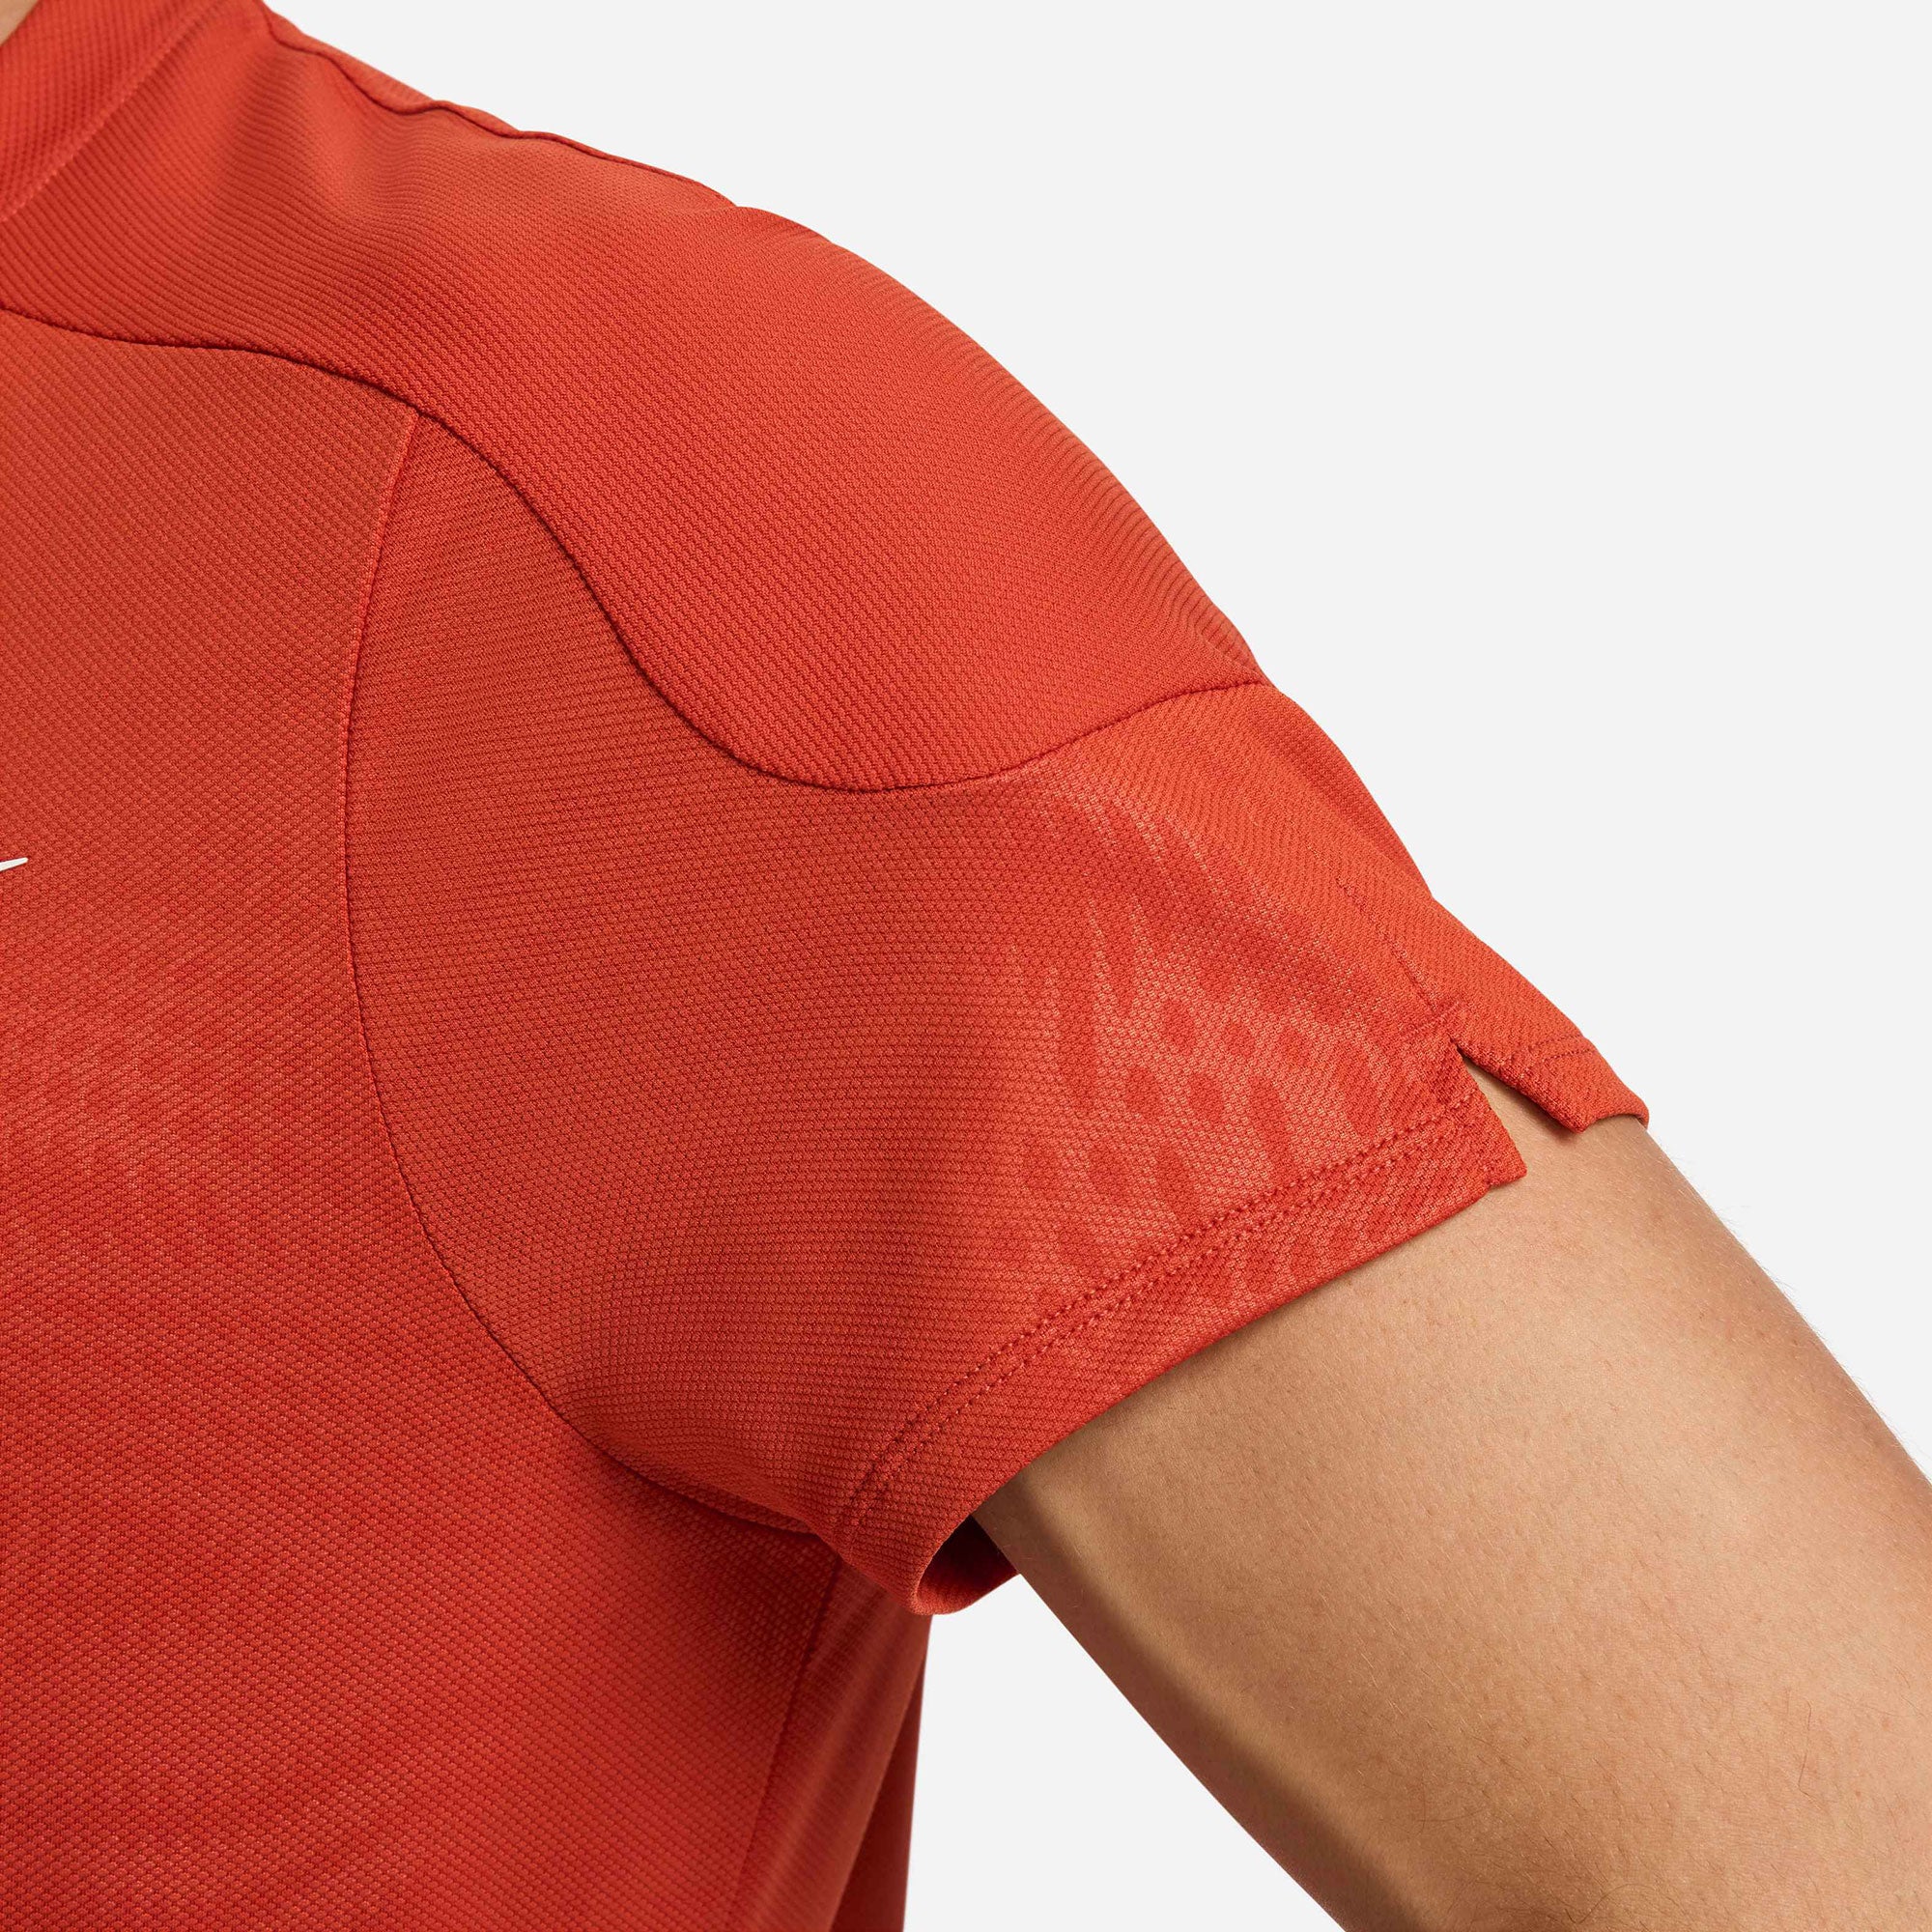 NikeCourt Slam Paris Men's Dri-FIT Tennis Shirt - Orange (5)